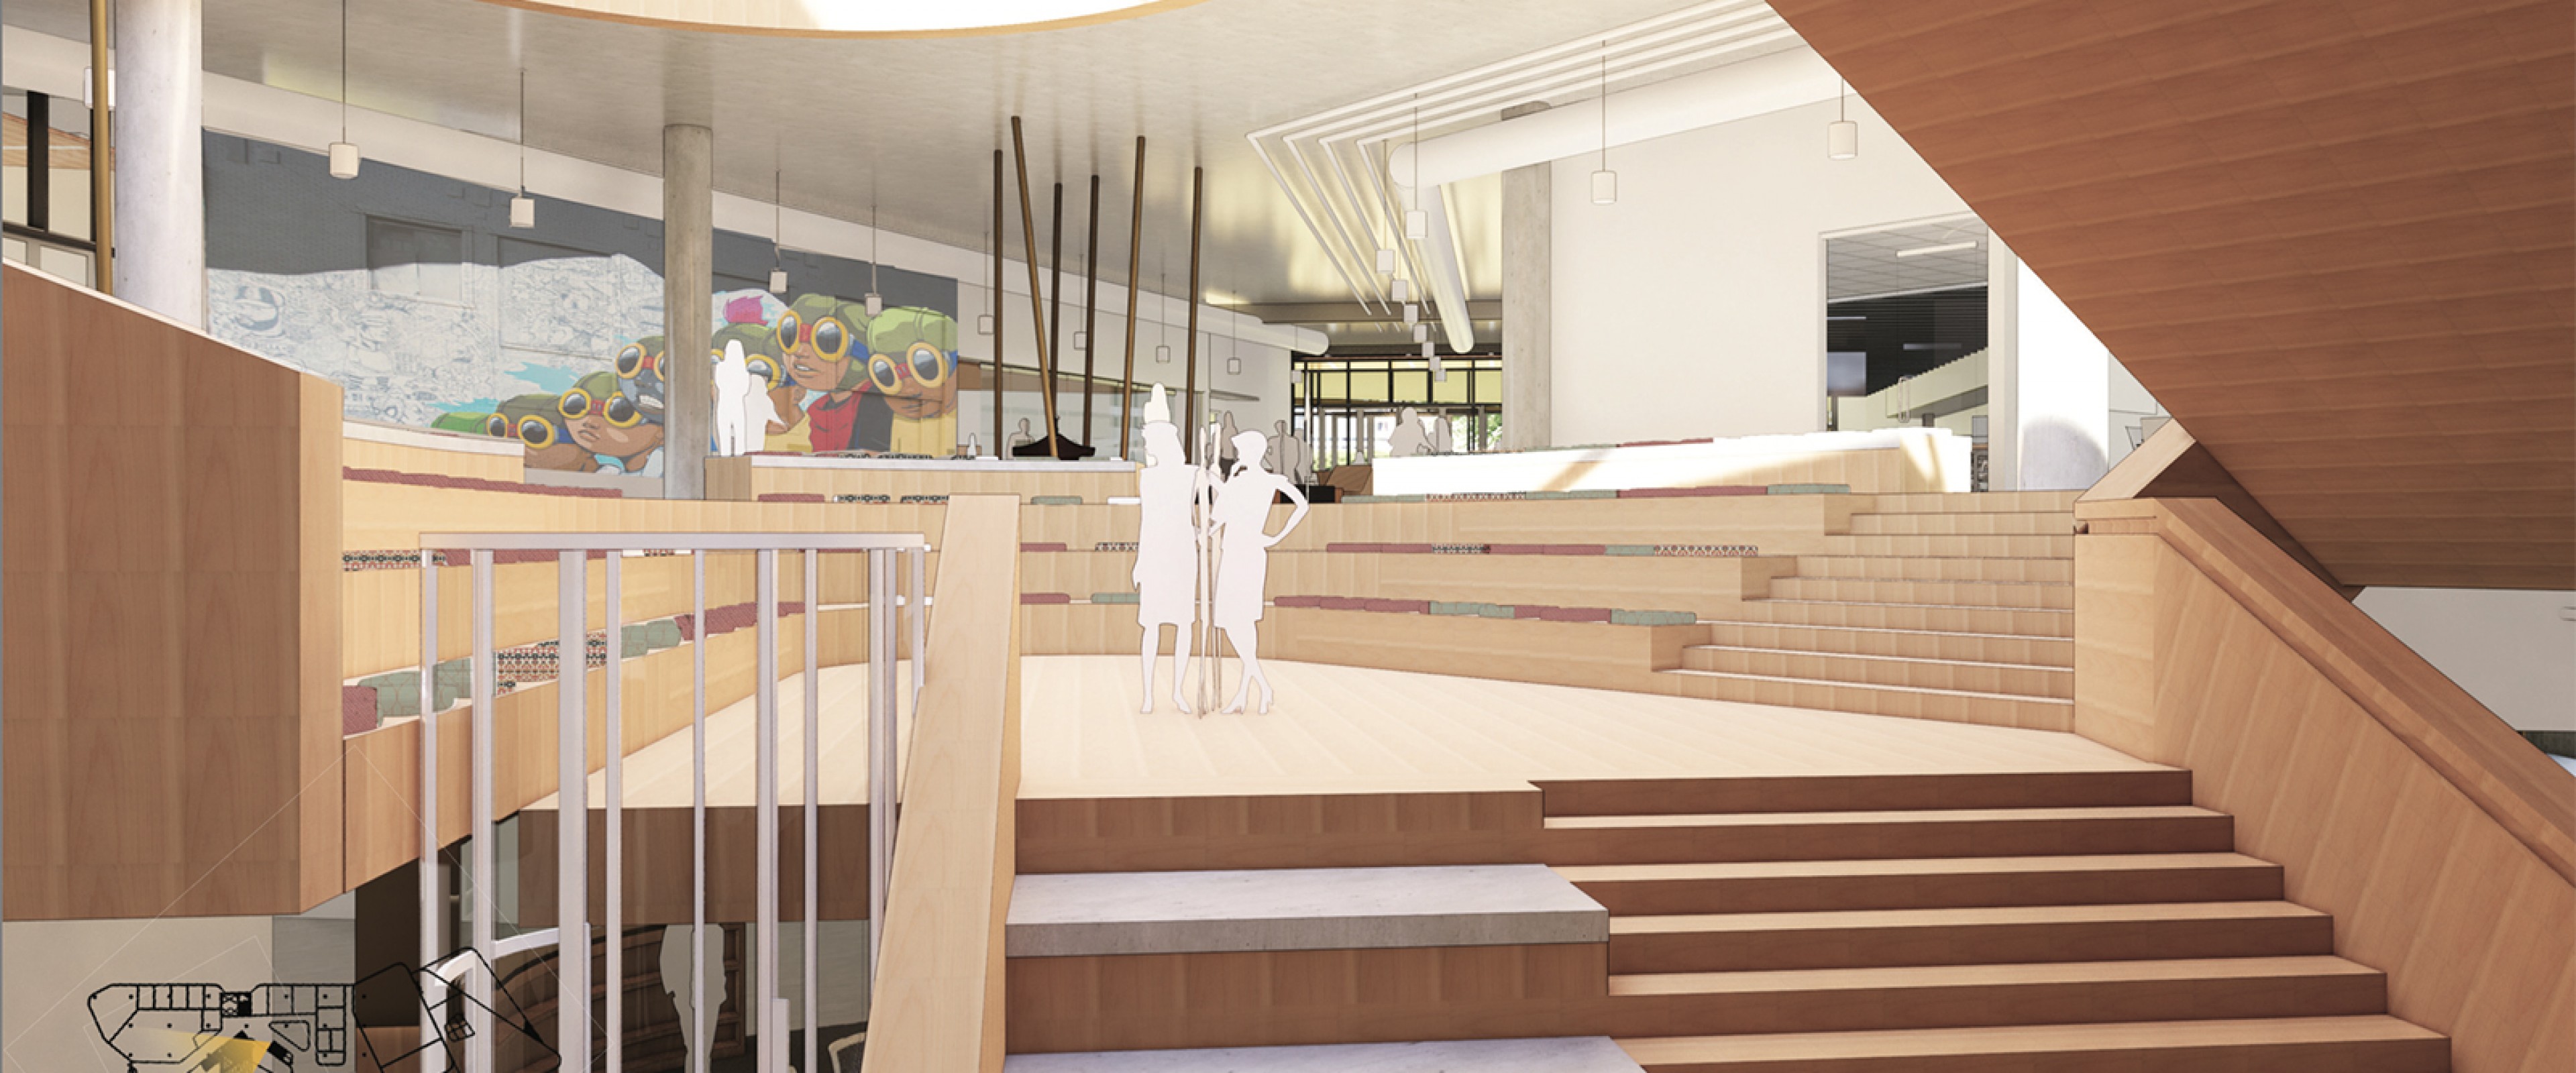 New Student Center interior concept